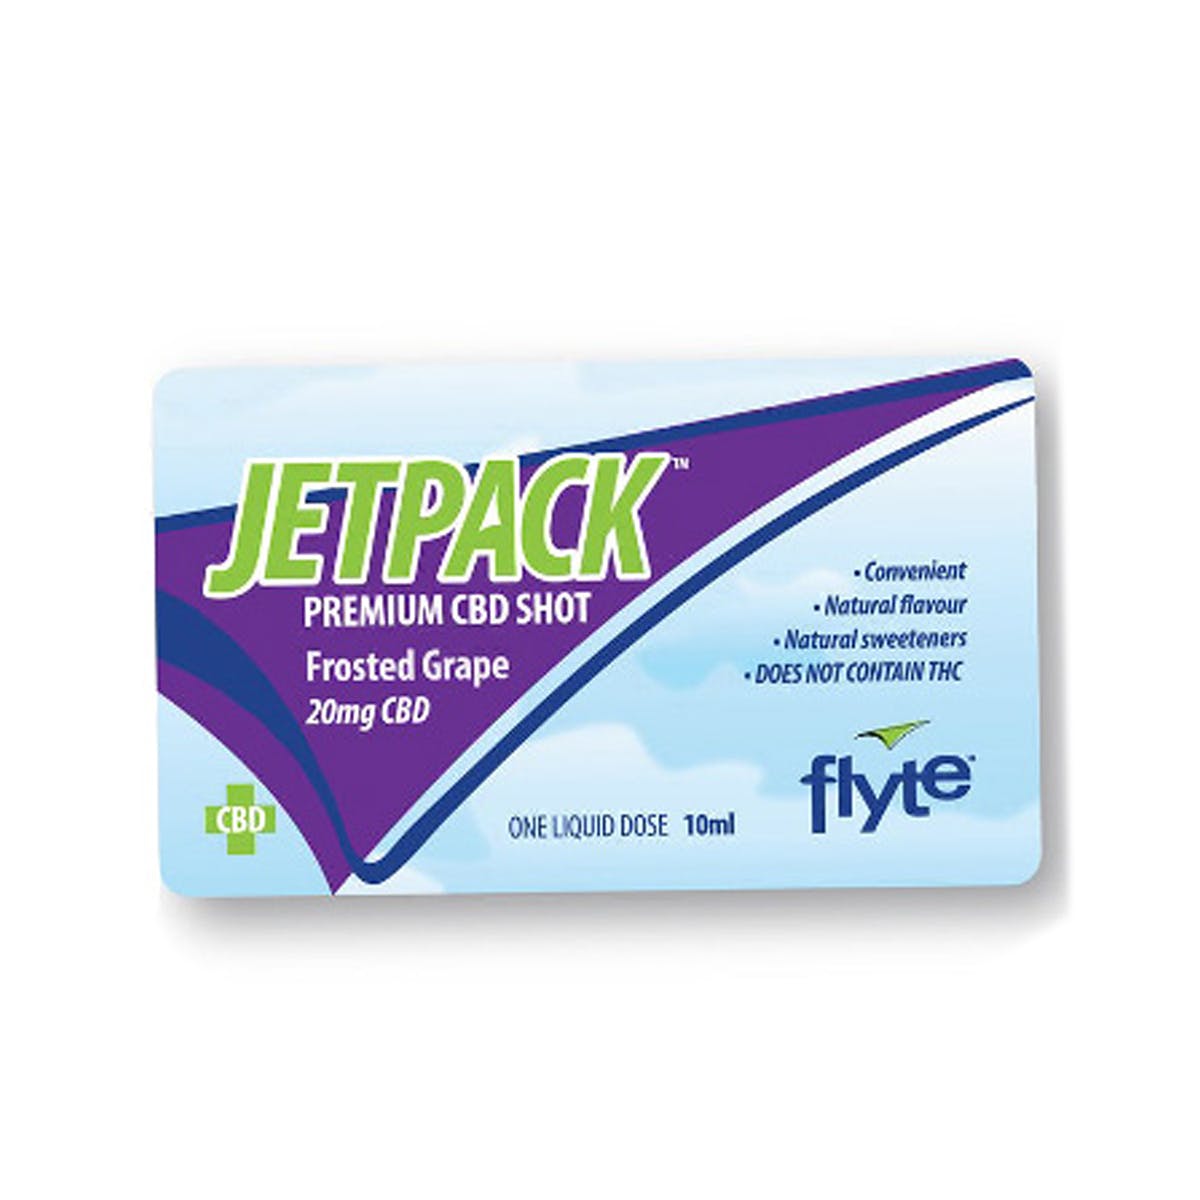 JetPack (CBD) Shot - Frosted Grape 20mg